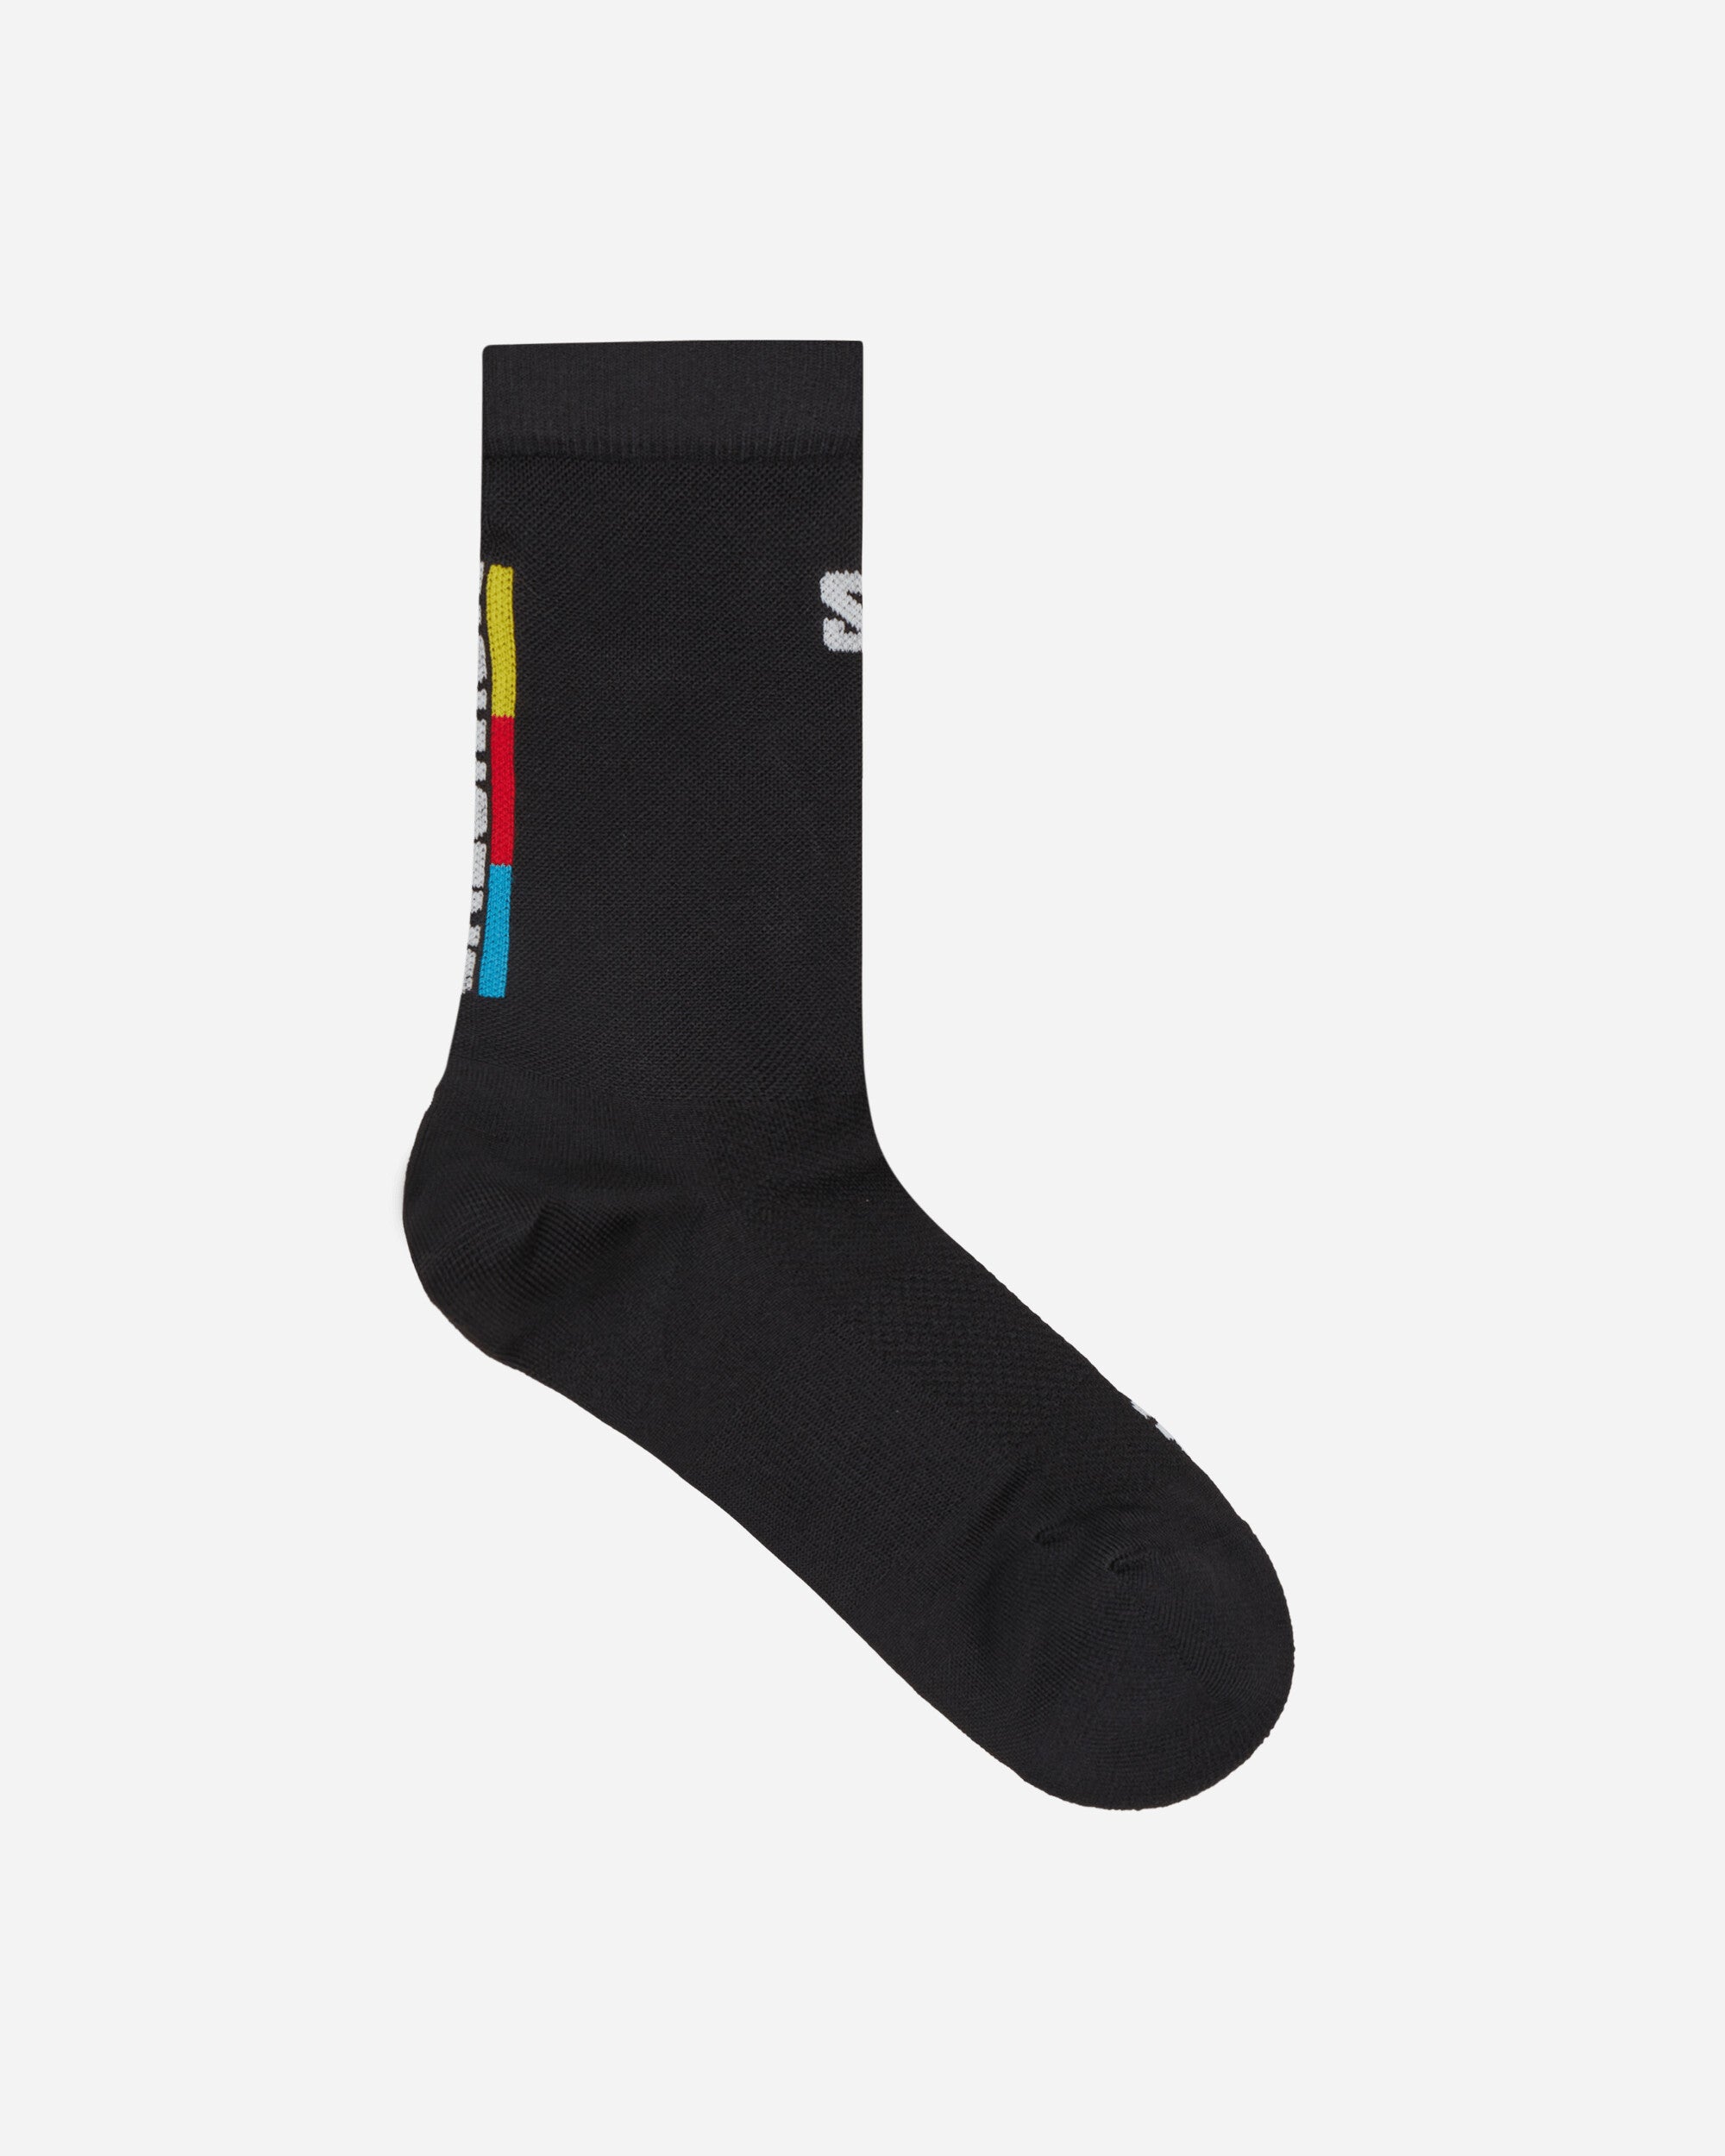 Salomon Pulse Race Flag Crew Black/Bright Red/Lemon Underwear Socks LC2262100